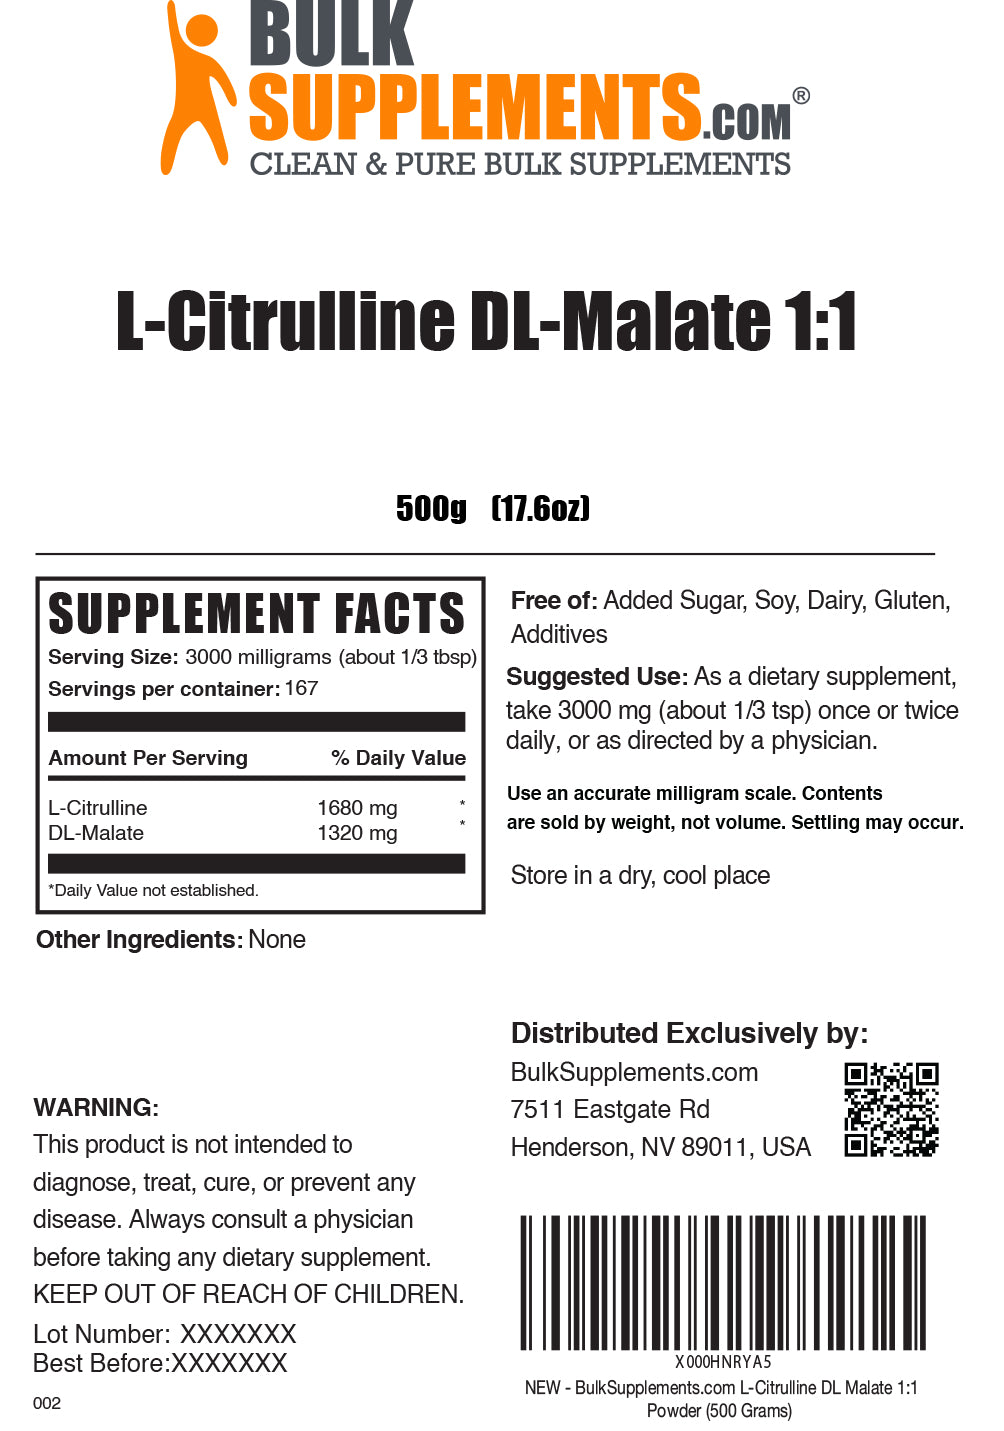 L-Citrulline DL-Malate 1:1 powder label 500g